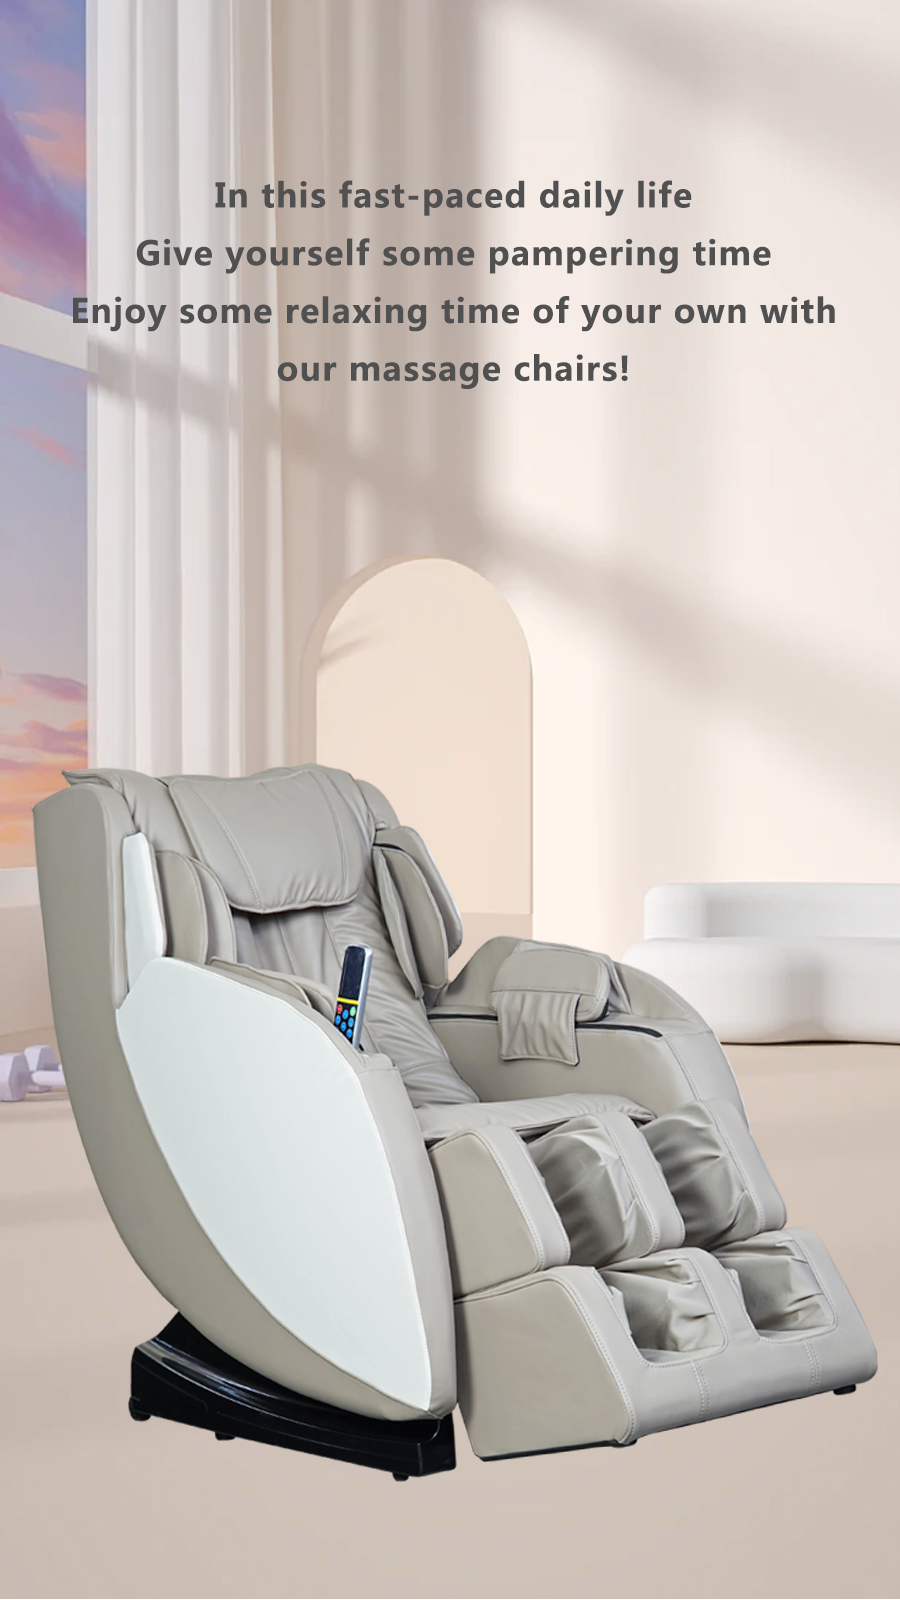 Brands Franco AZKARY II SIDEBOARDS, SPAIN AM886 Massage Chair